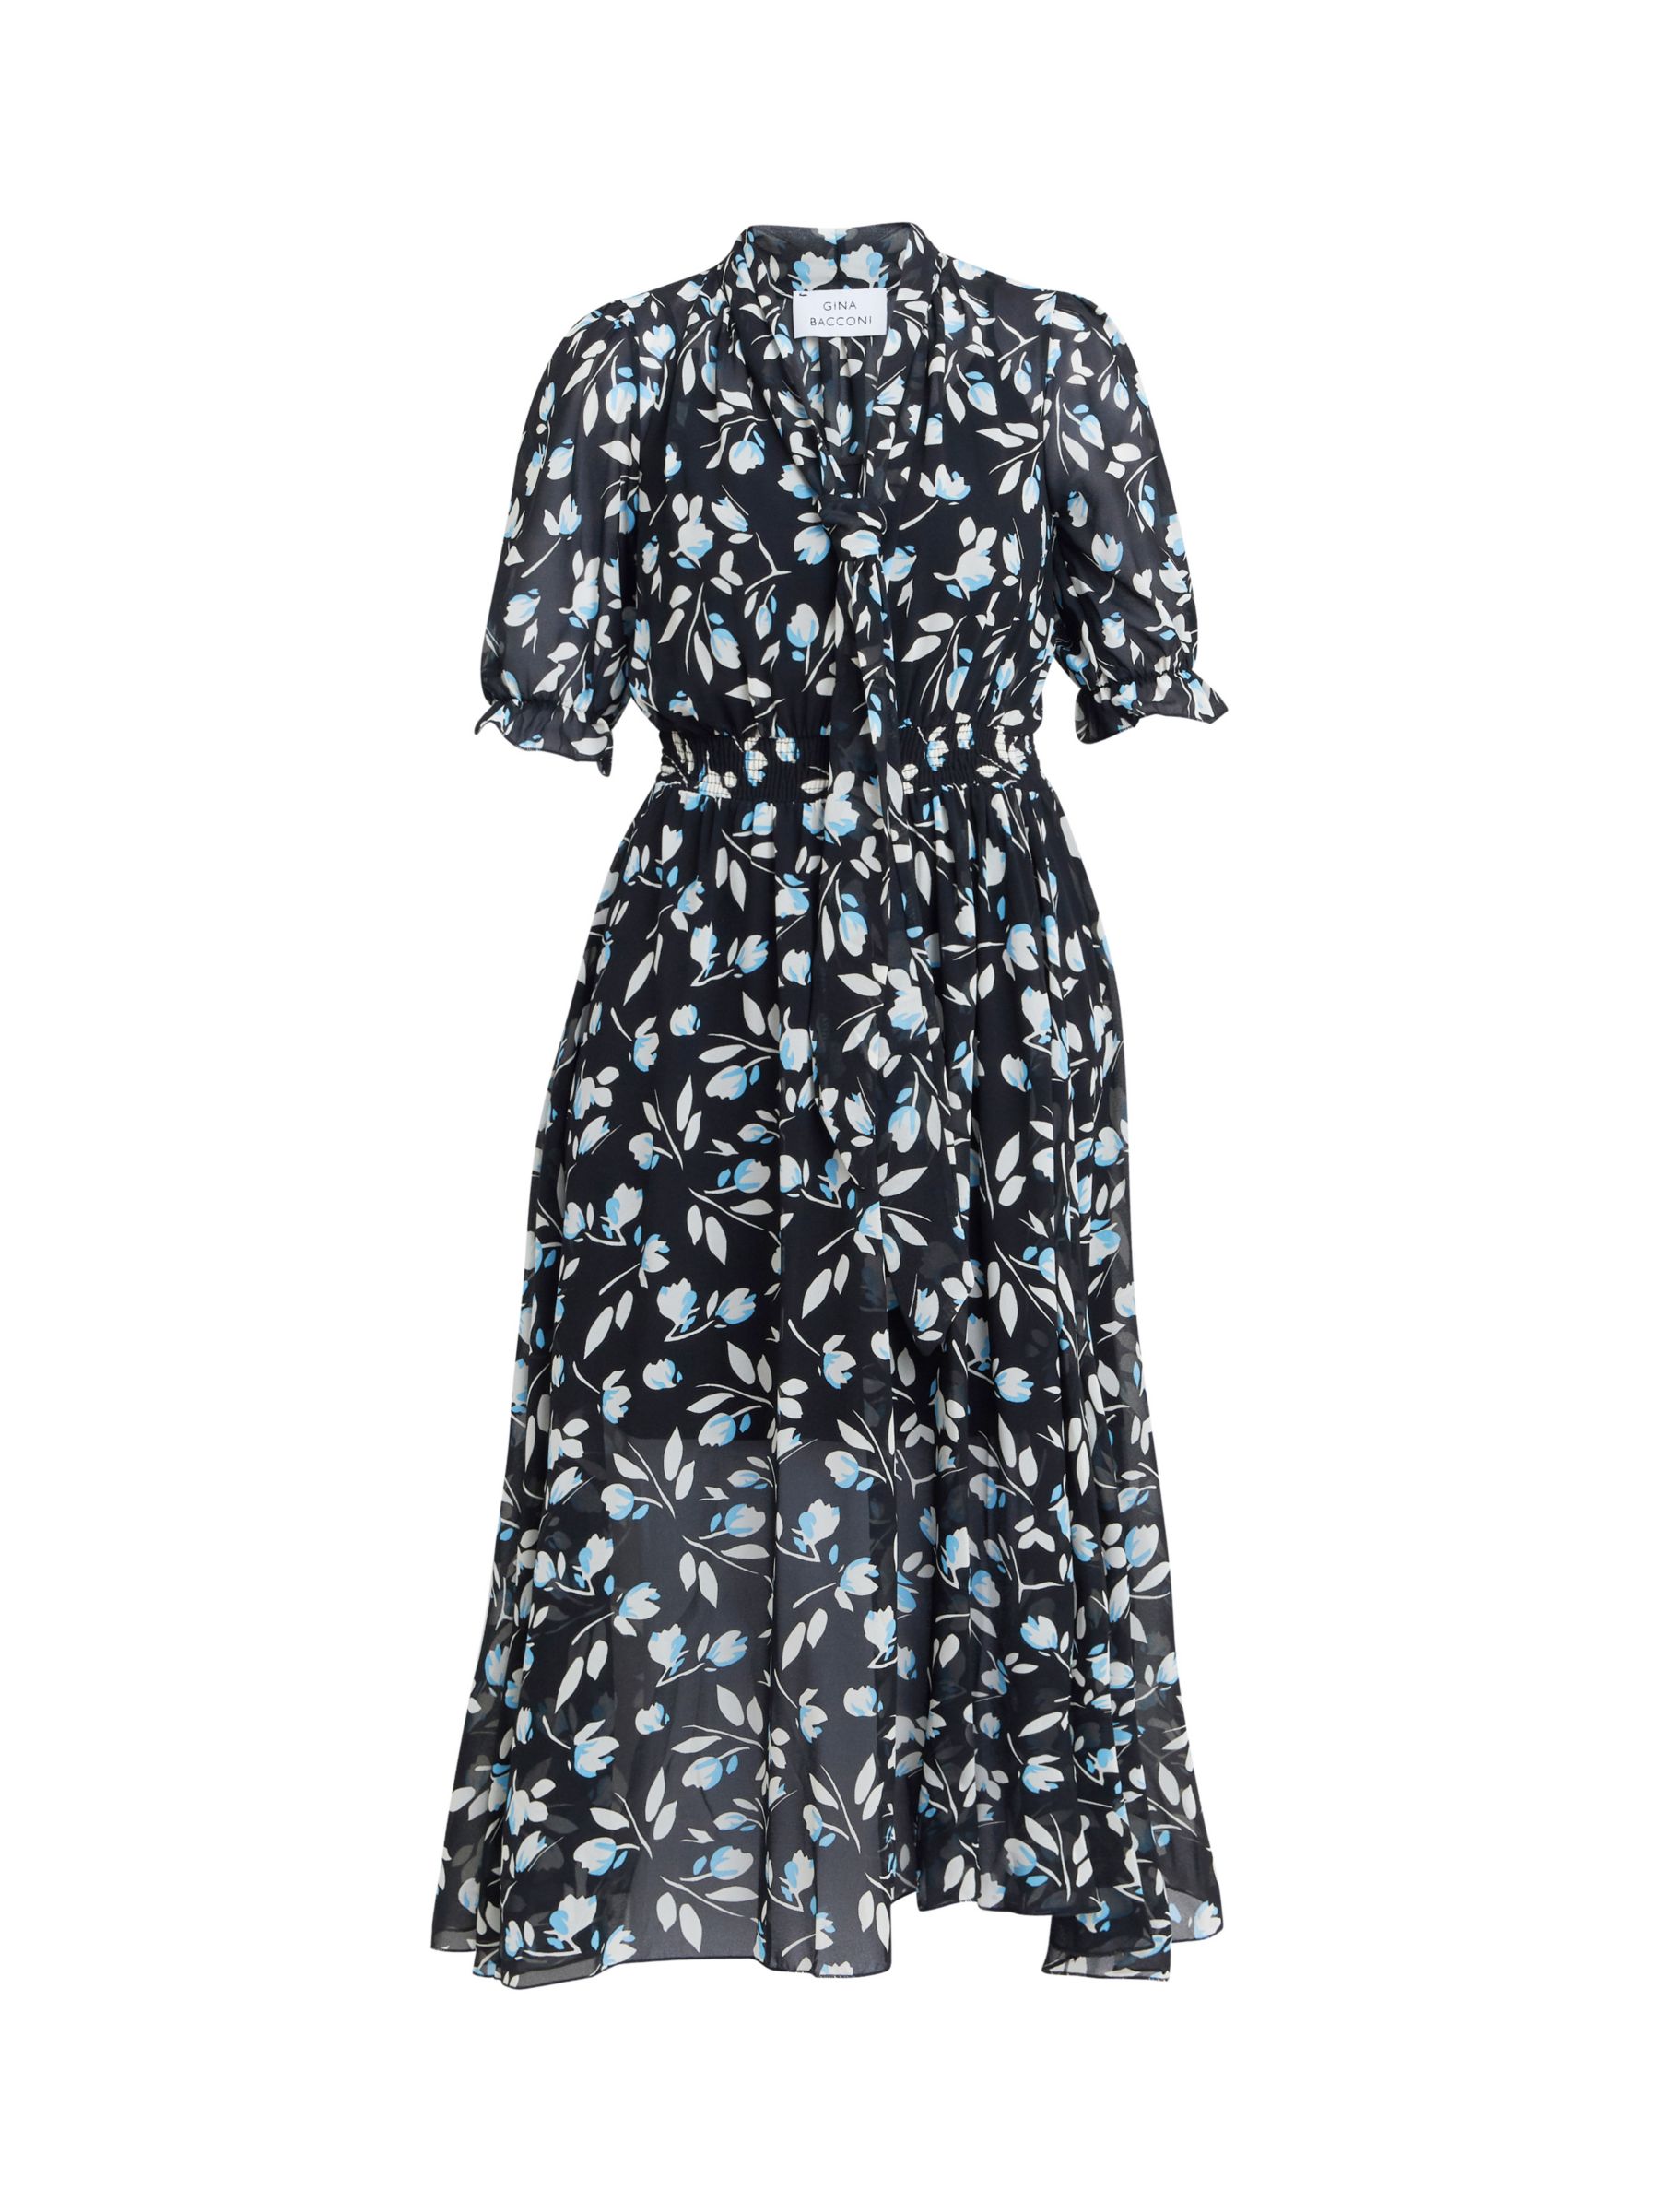 Gina Bacconi Mimi Godet Detail Tie Neck Midi Floral Dress, Black/Multi, S